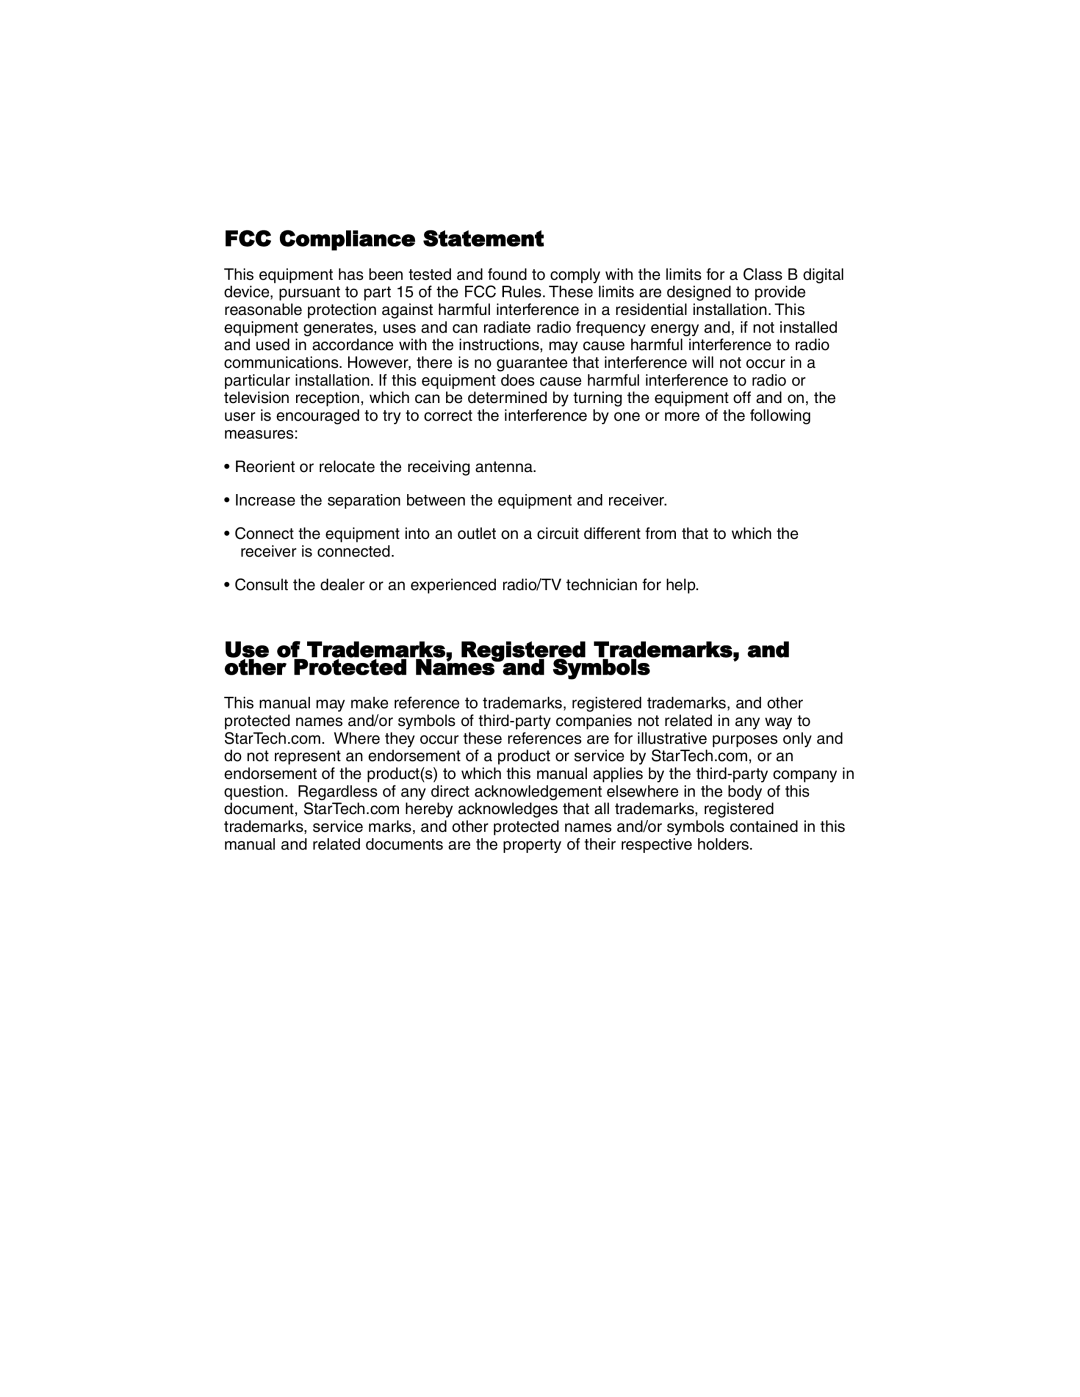 StarTech.com ST4202USB, ST7202USB instruction manual FCC Compliance Statement 